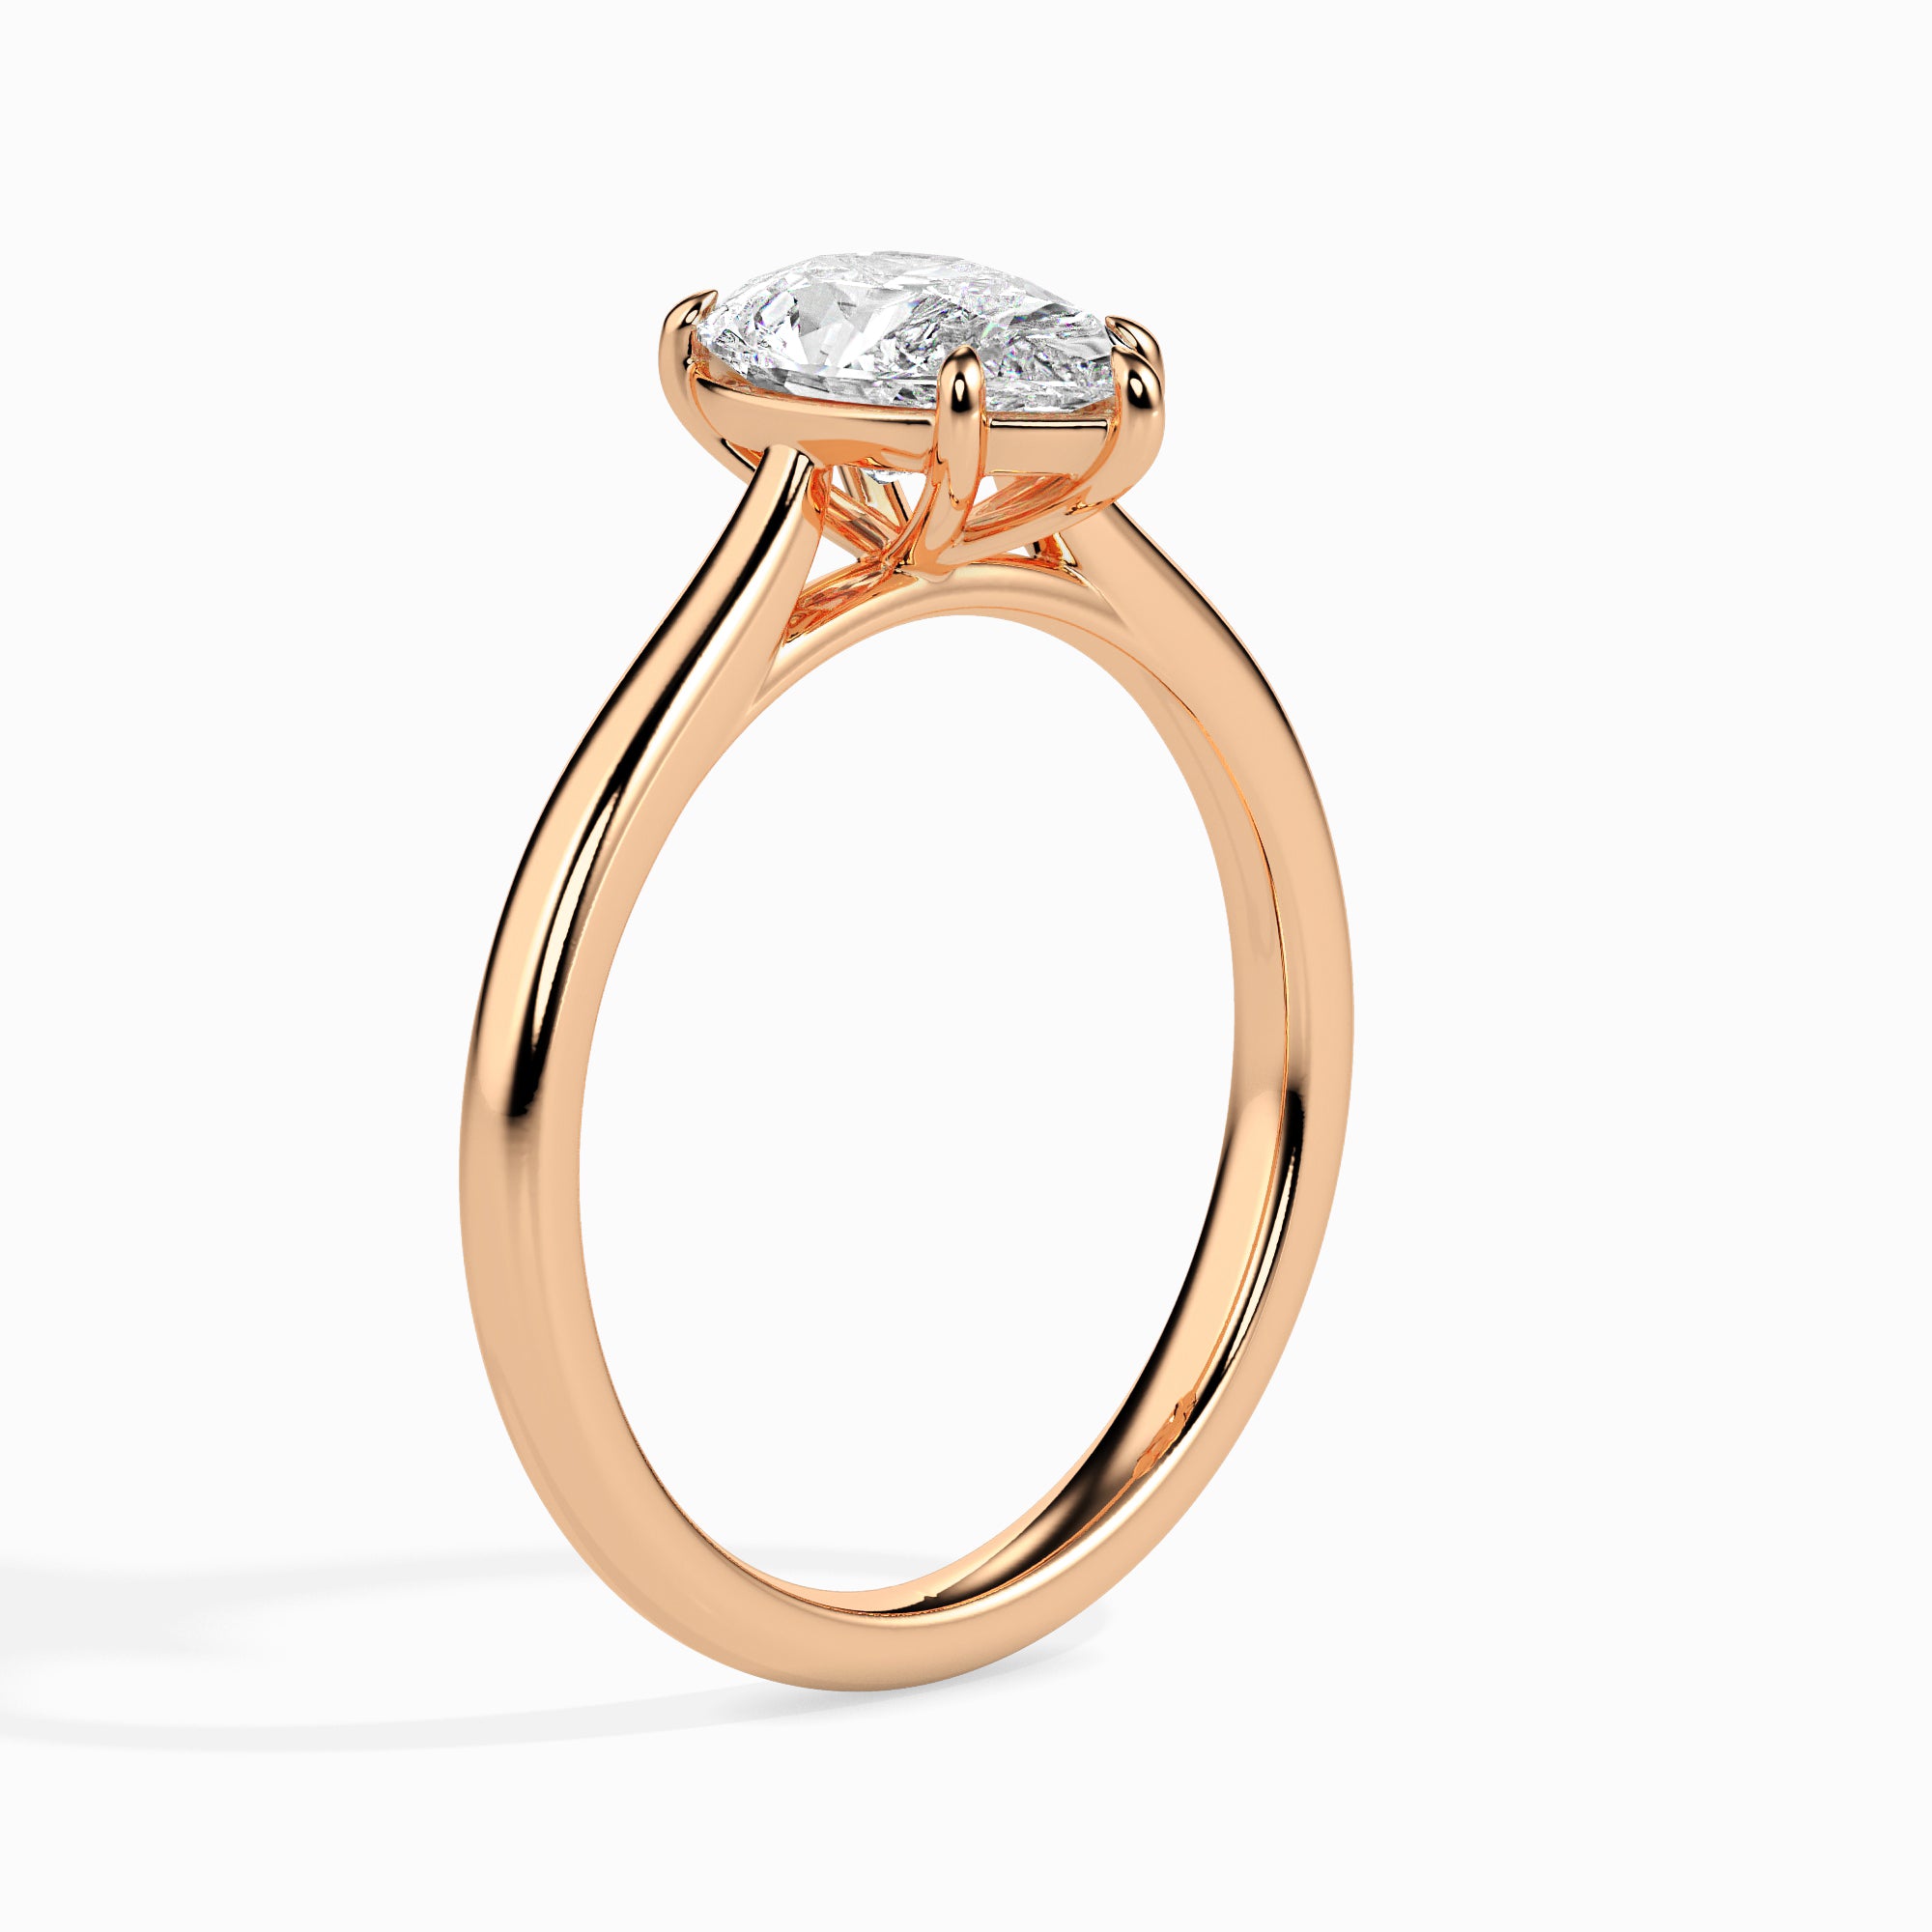 30-Pointer Pear Cut Solitaire Diamond 18K Rose Gold Ring JL AU 19010R